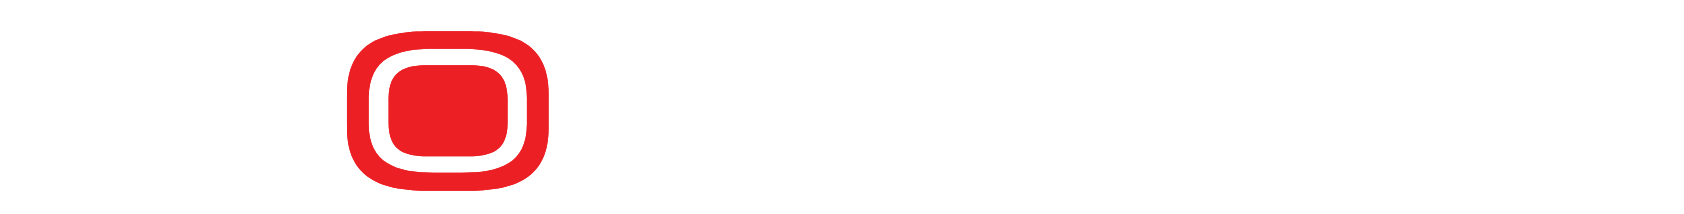 Sportradar logo grand pour les fonds sombres (PNG transparent)